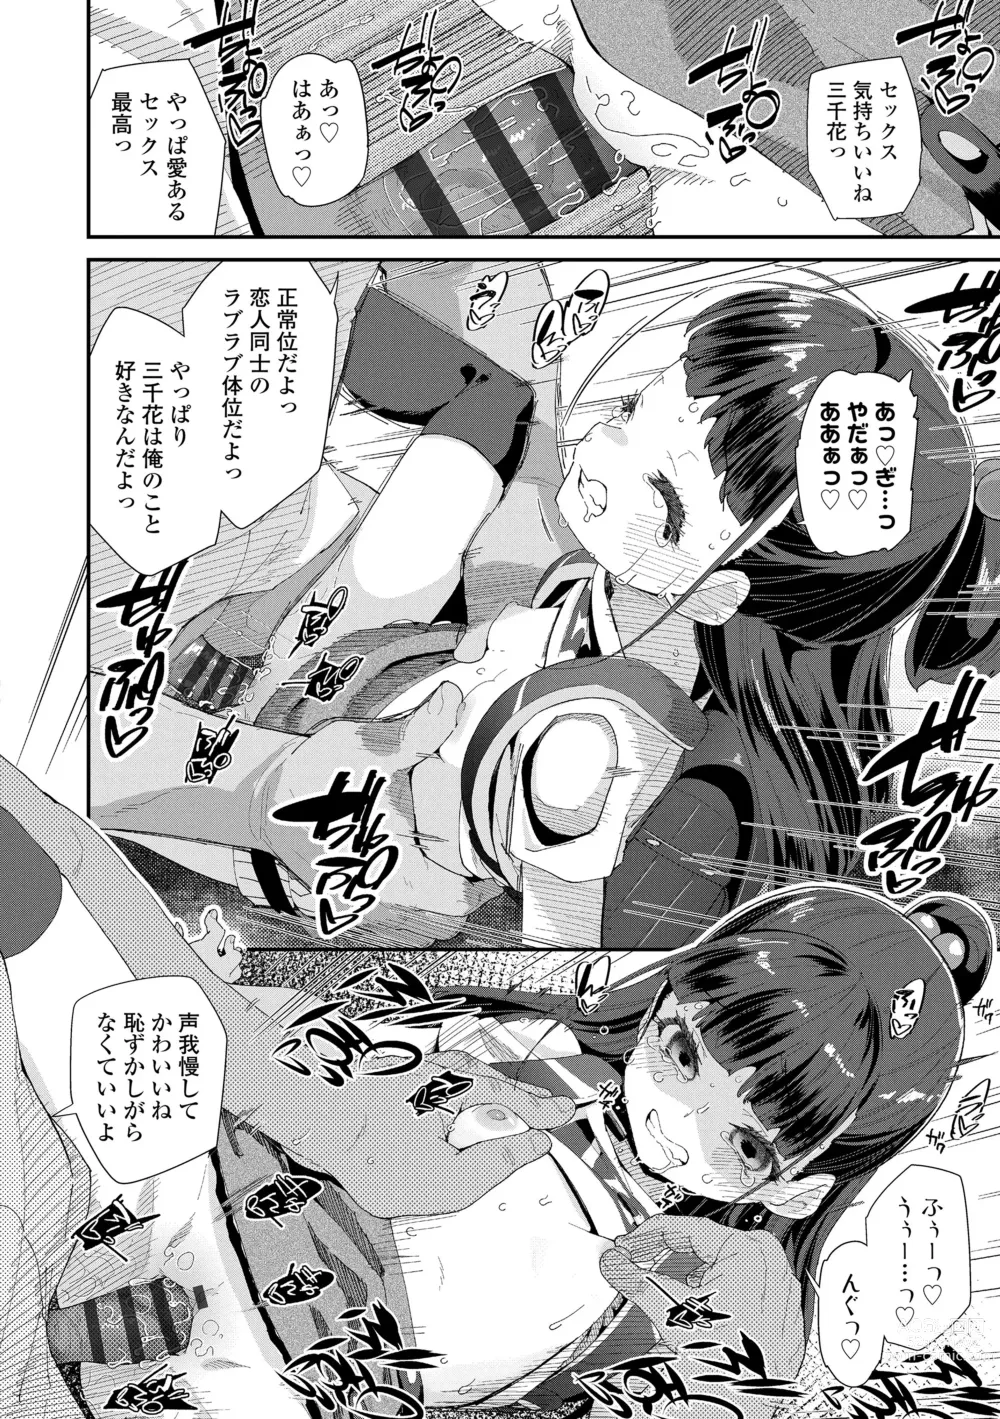 Page 188 of manga Mitsu to Chou